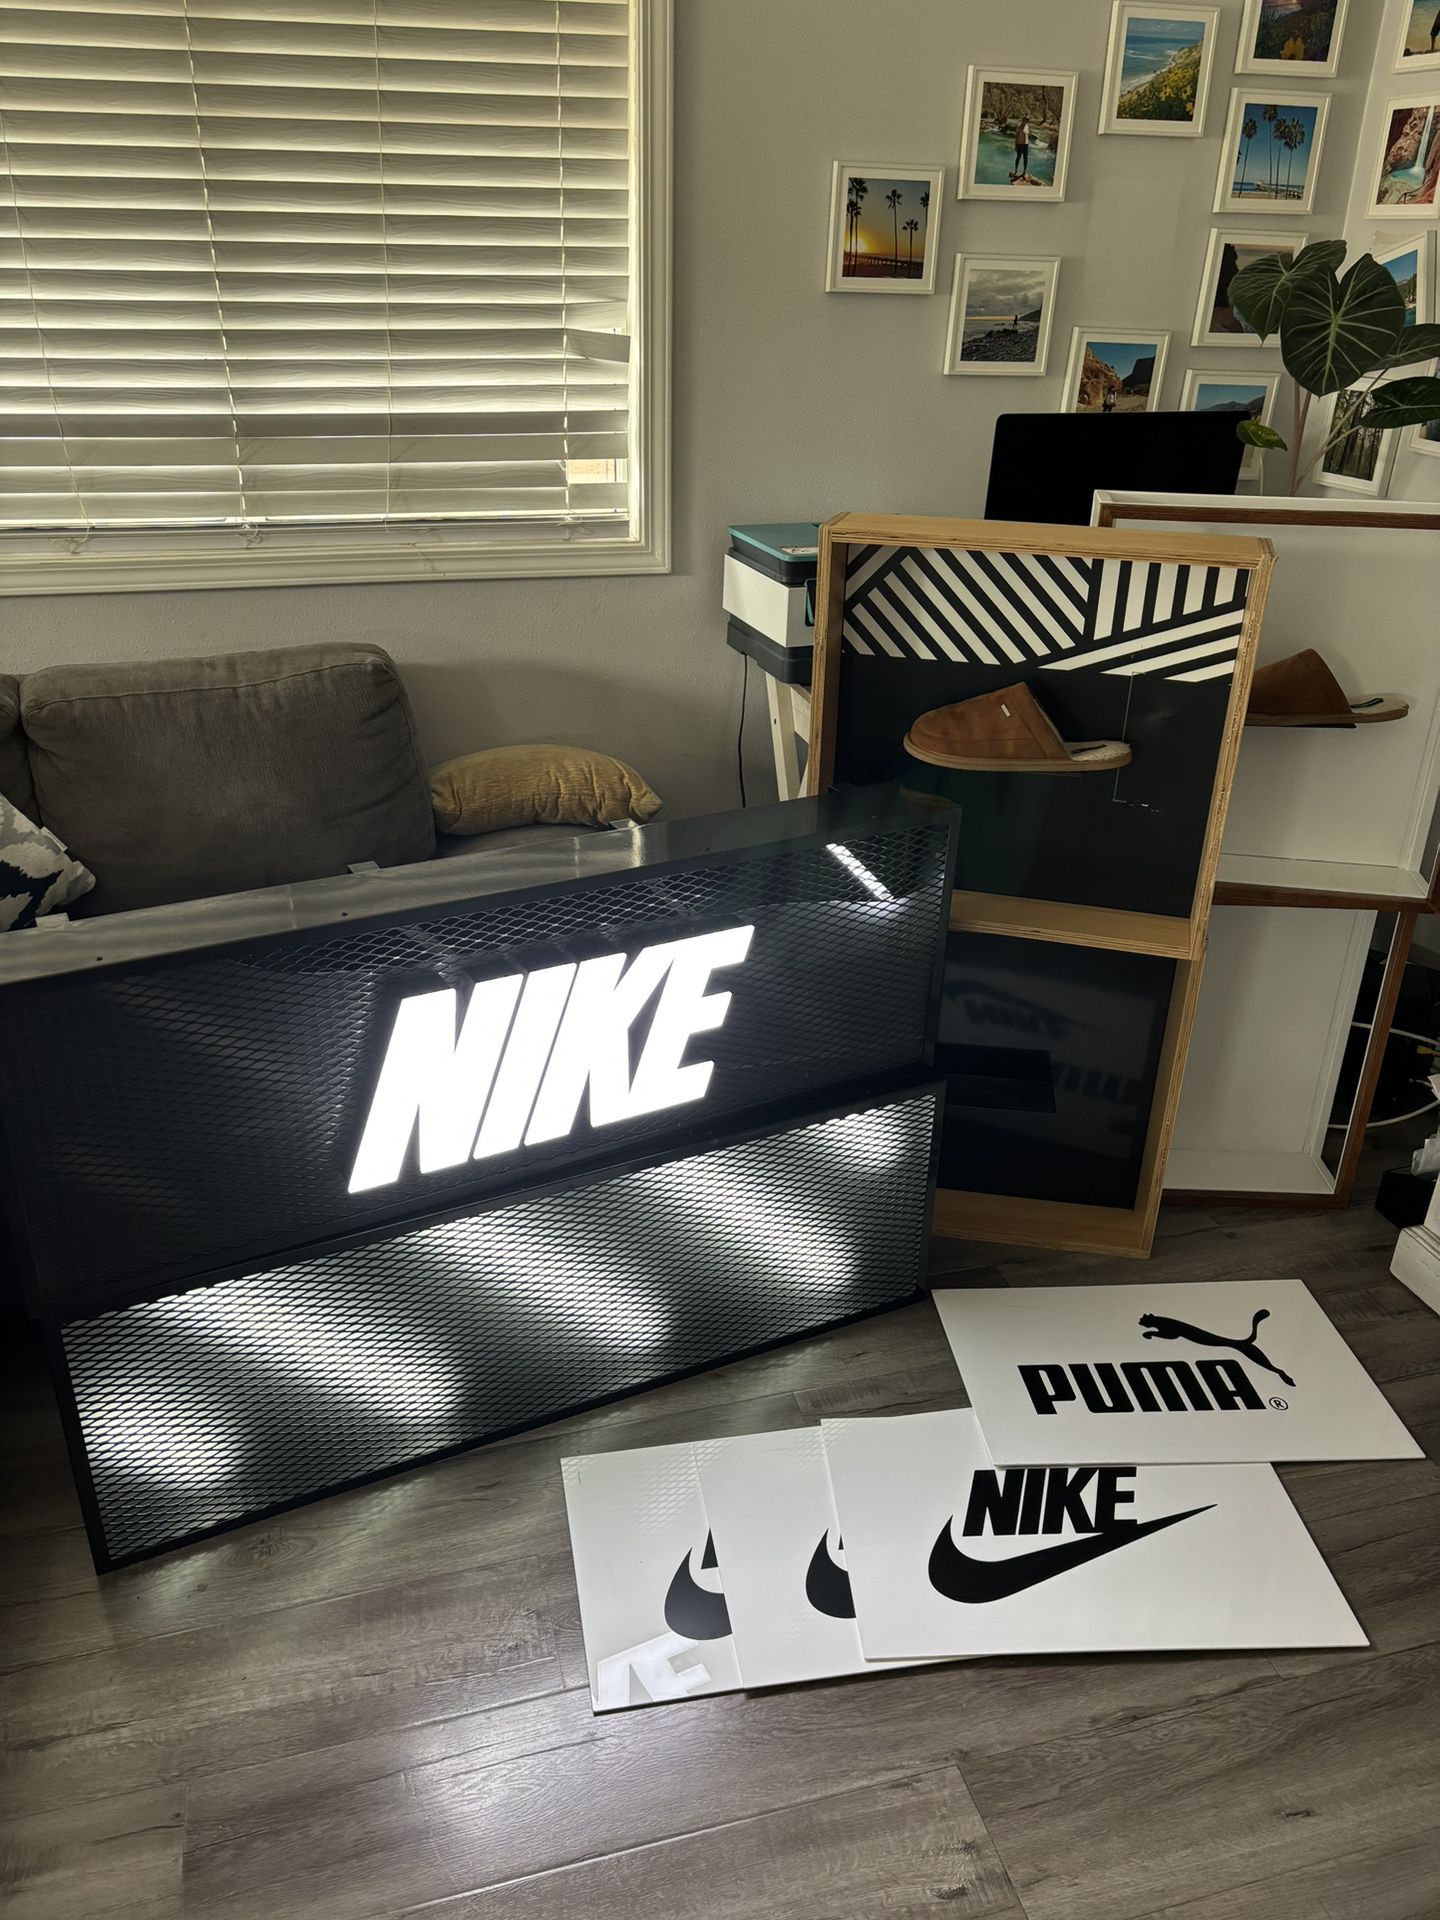 Light Up LED Nike Store Sign Displays 